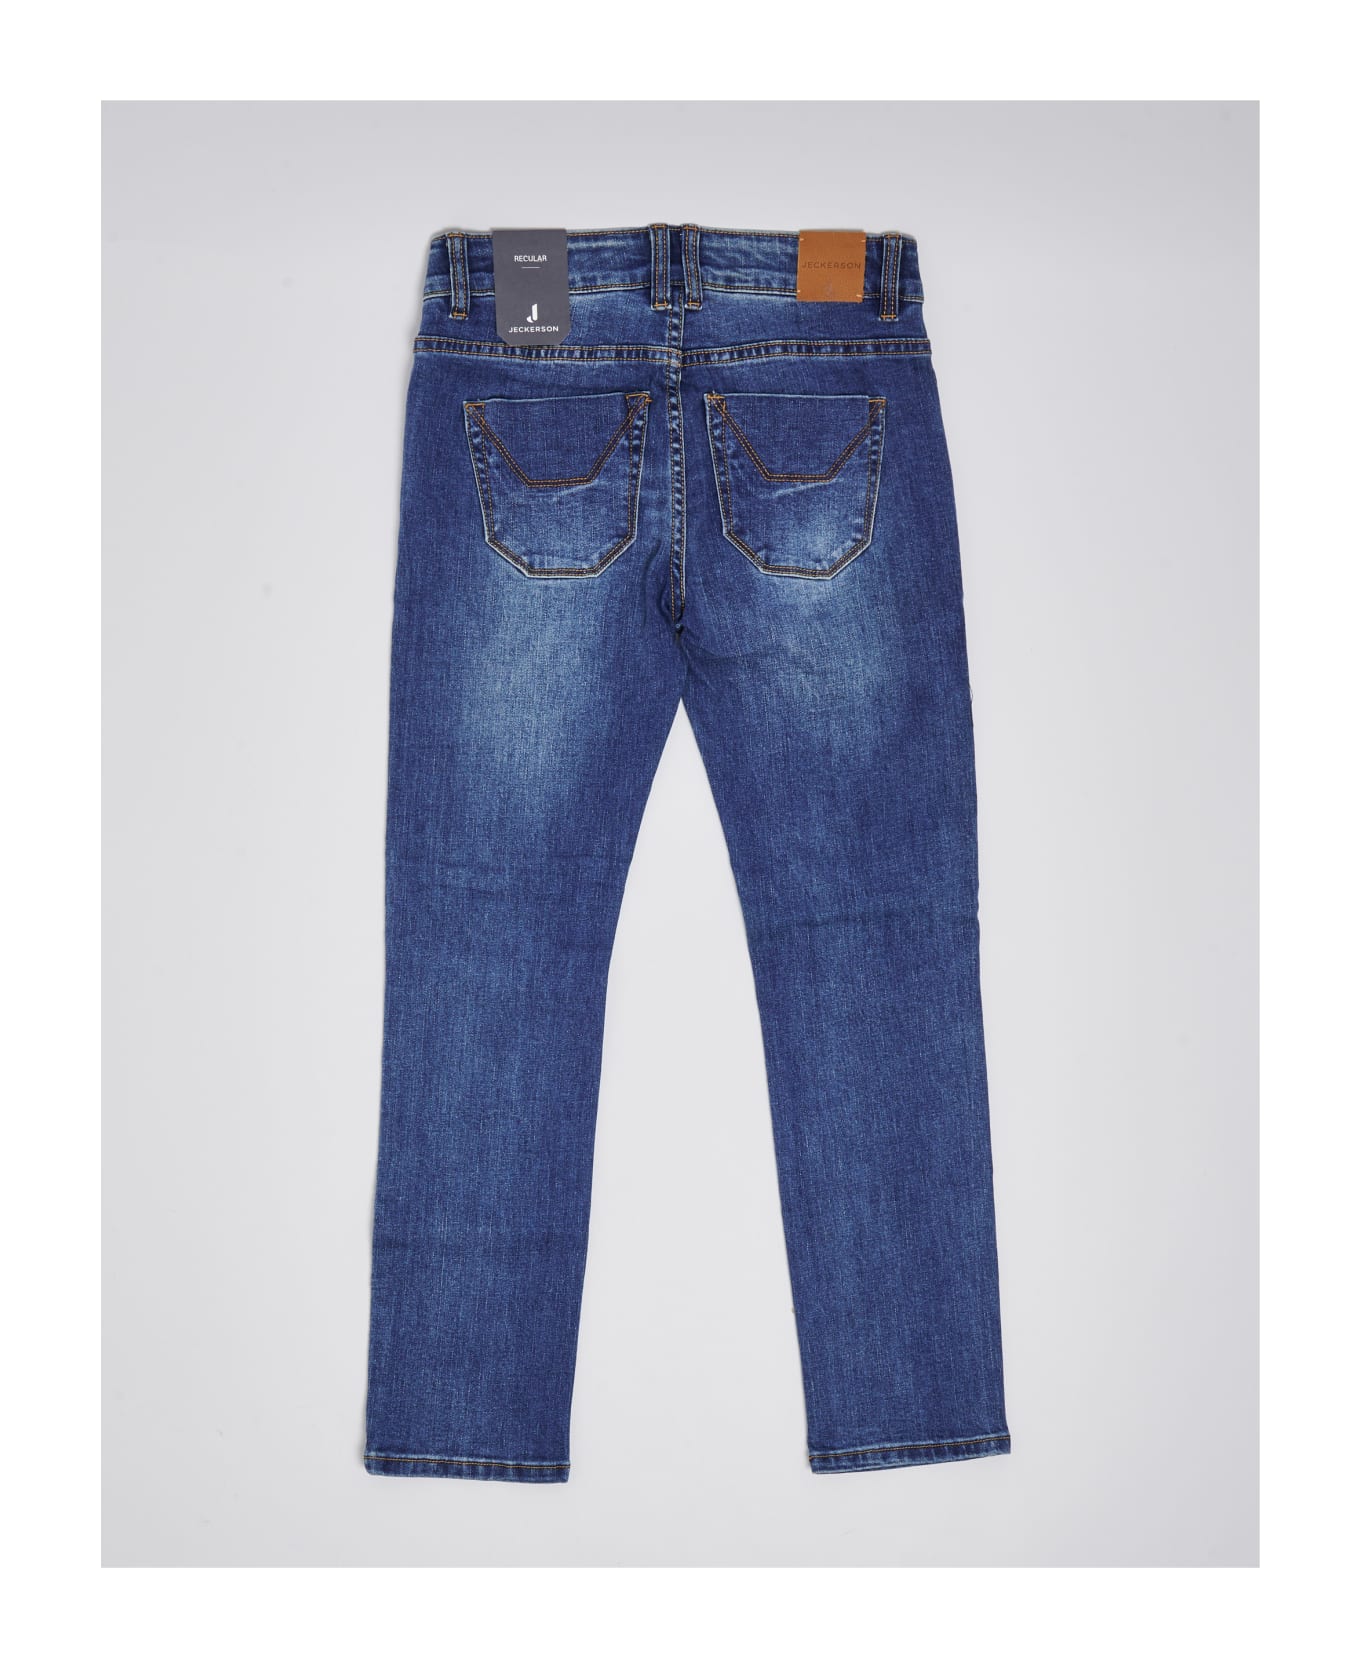 Jeckerson Jeans Jeans - DENIM